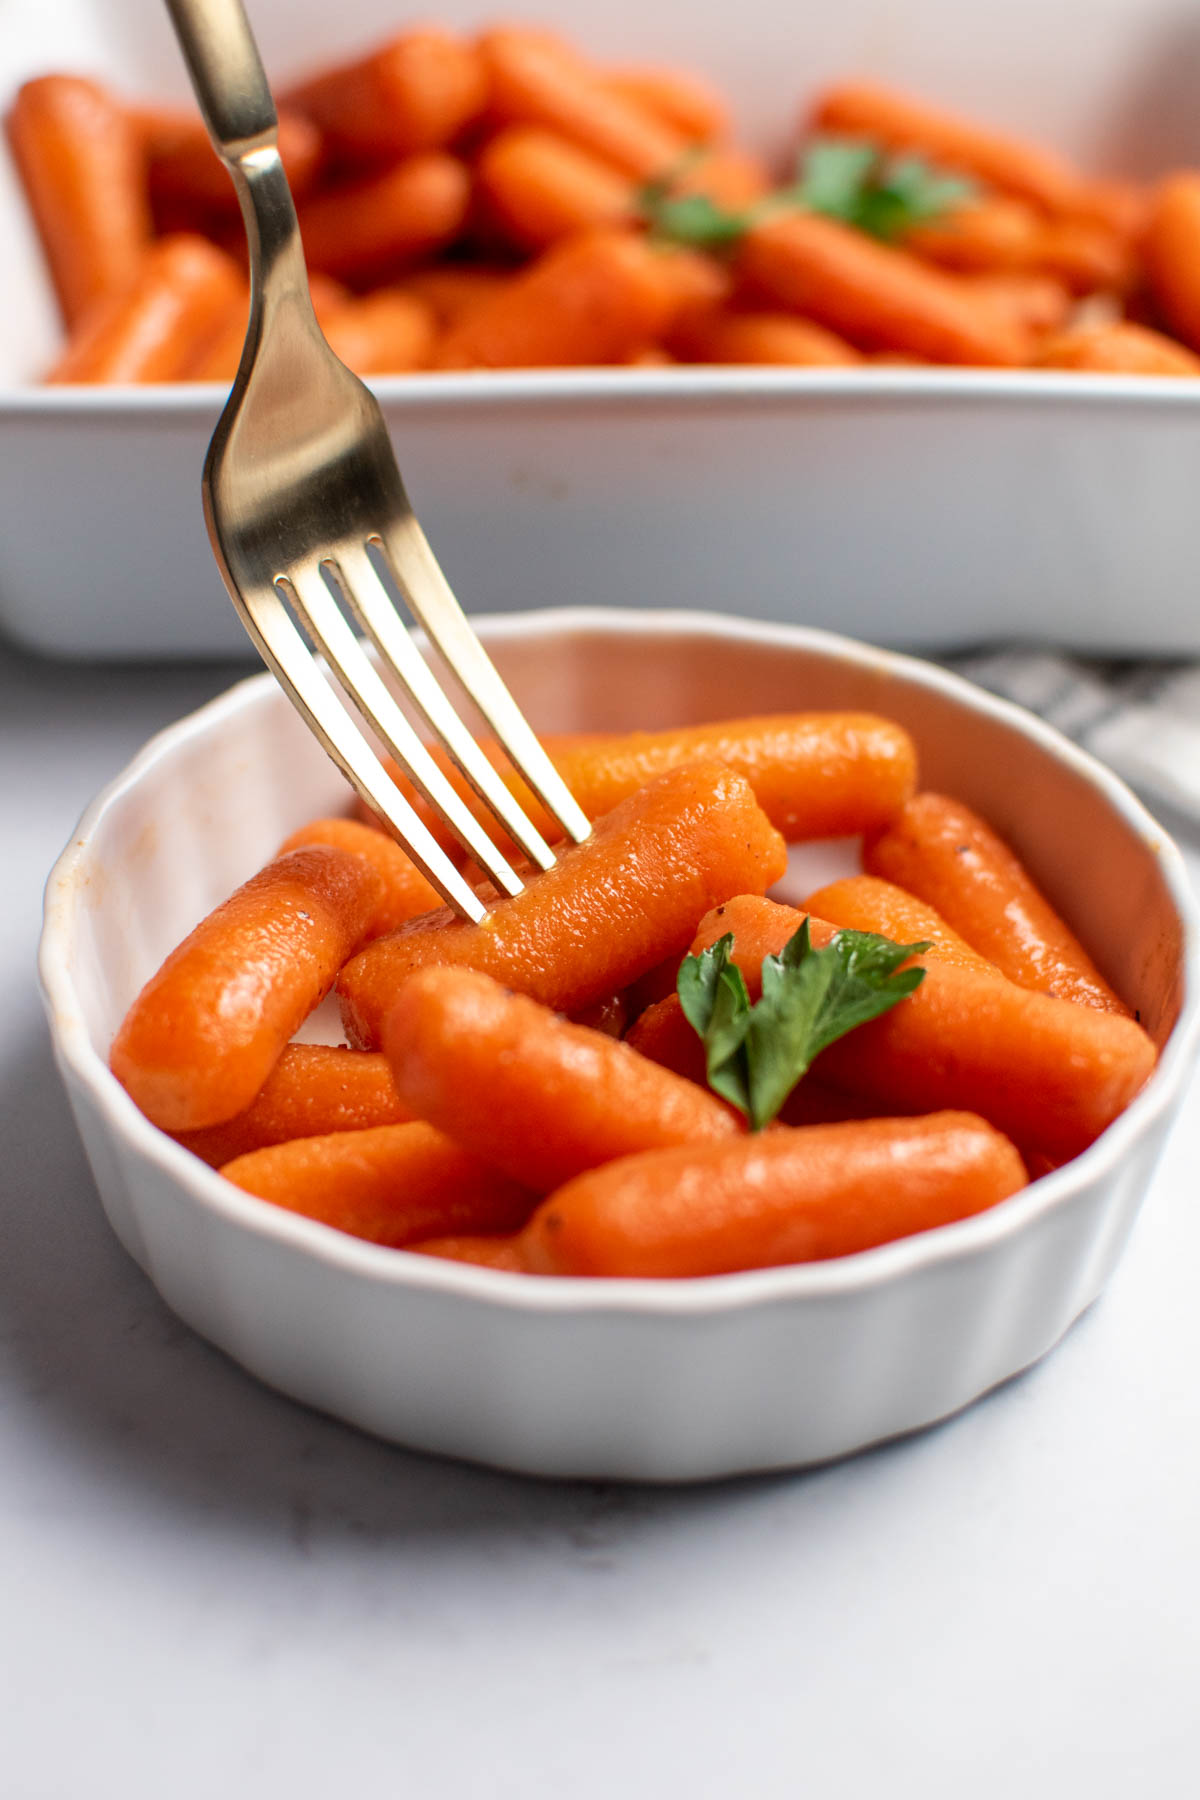 Gold fork pierces single carrot from ramekin full of brown sugar honey glazed carrots.